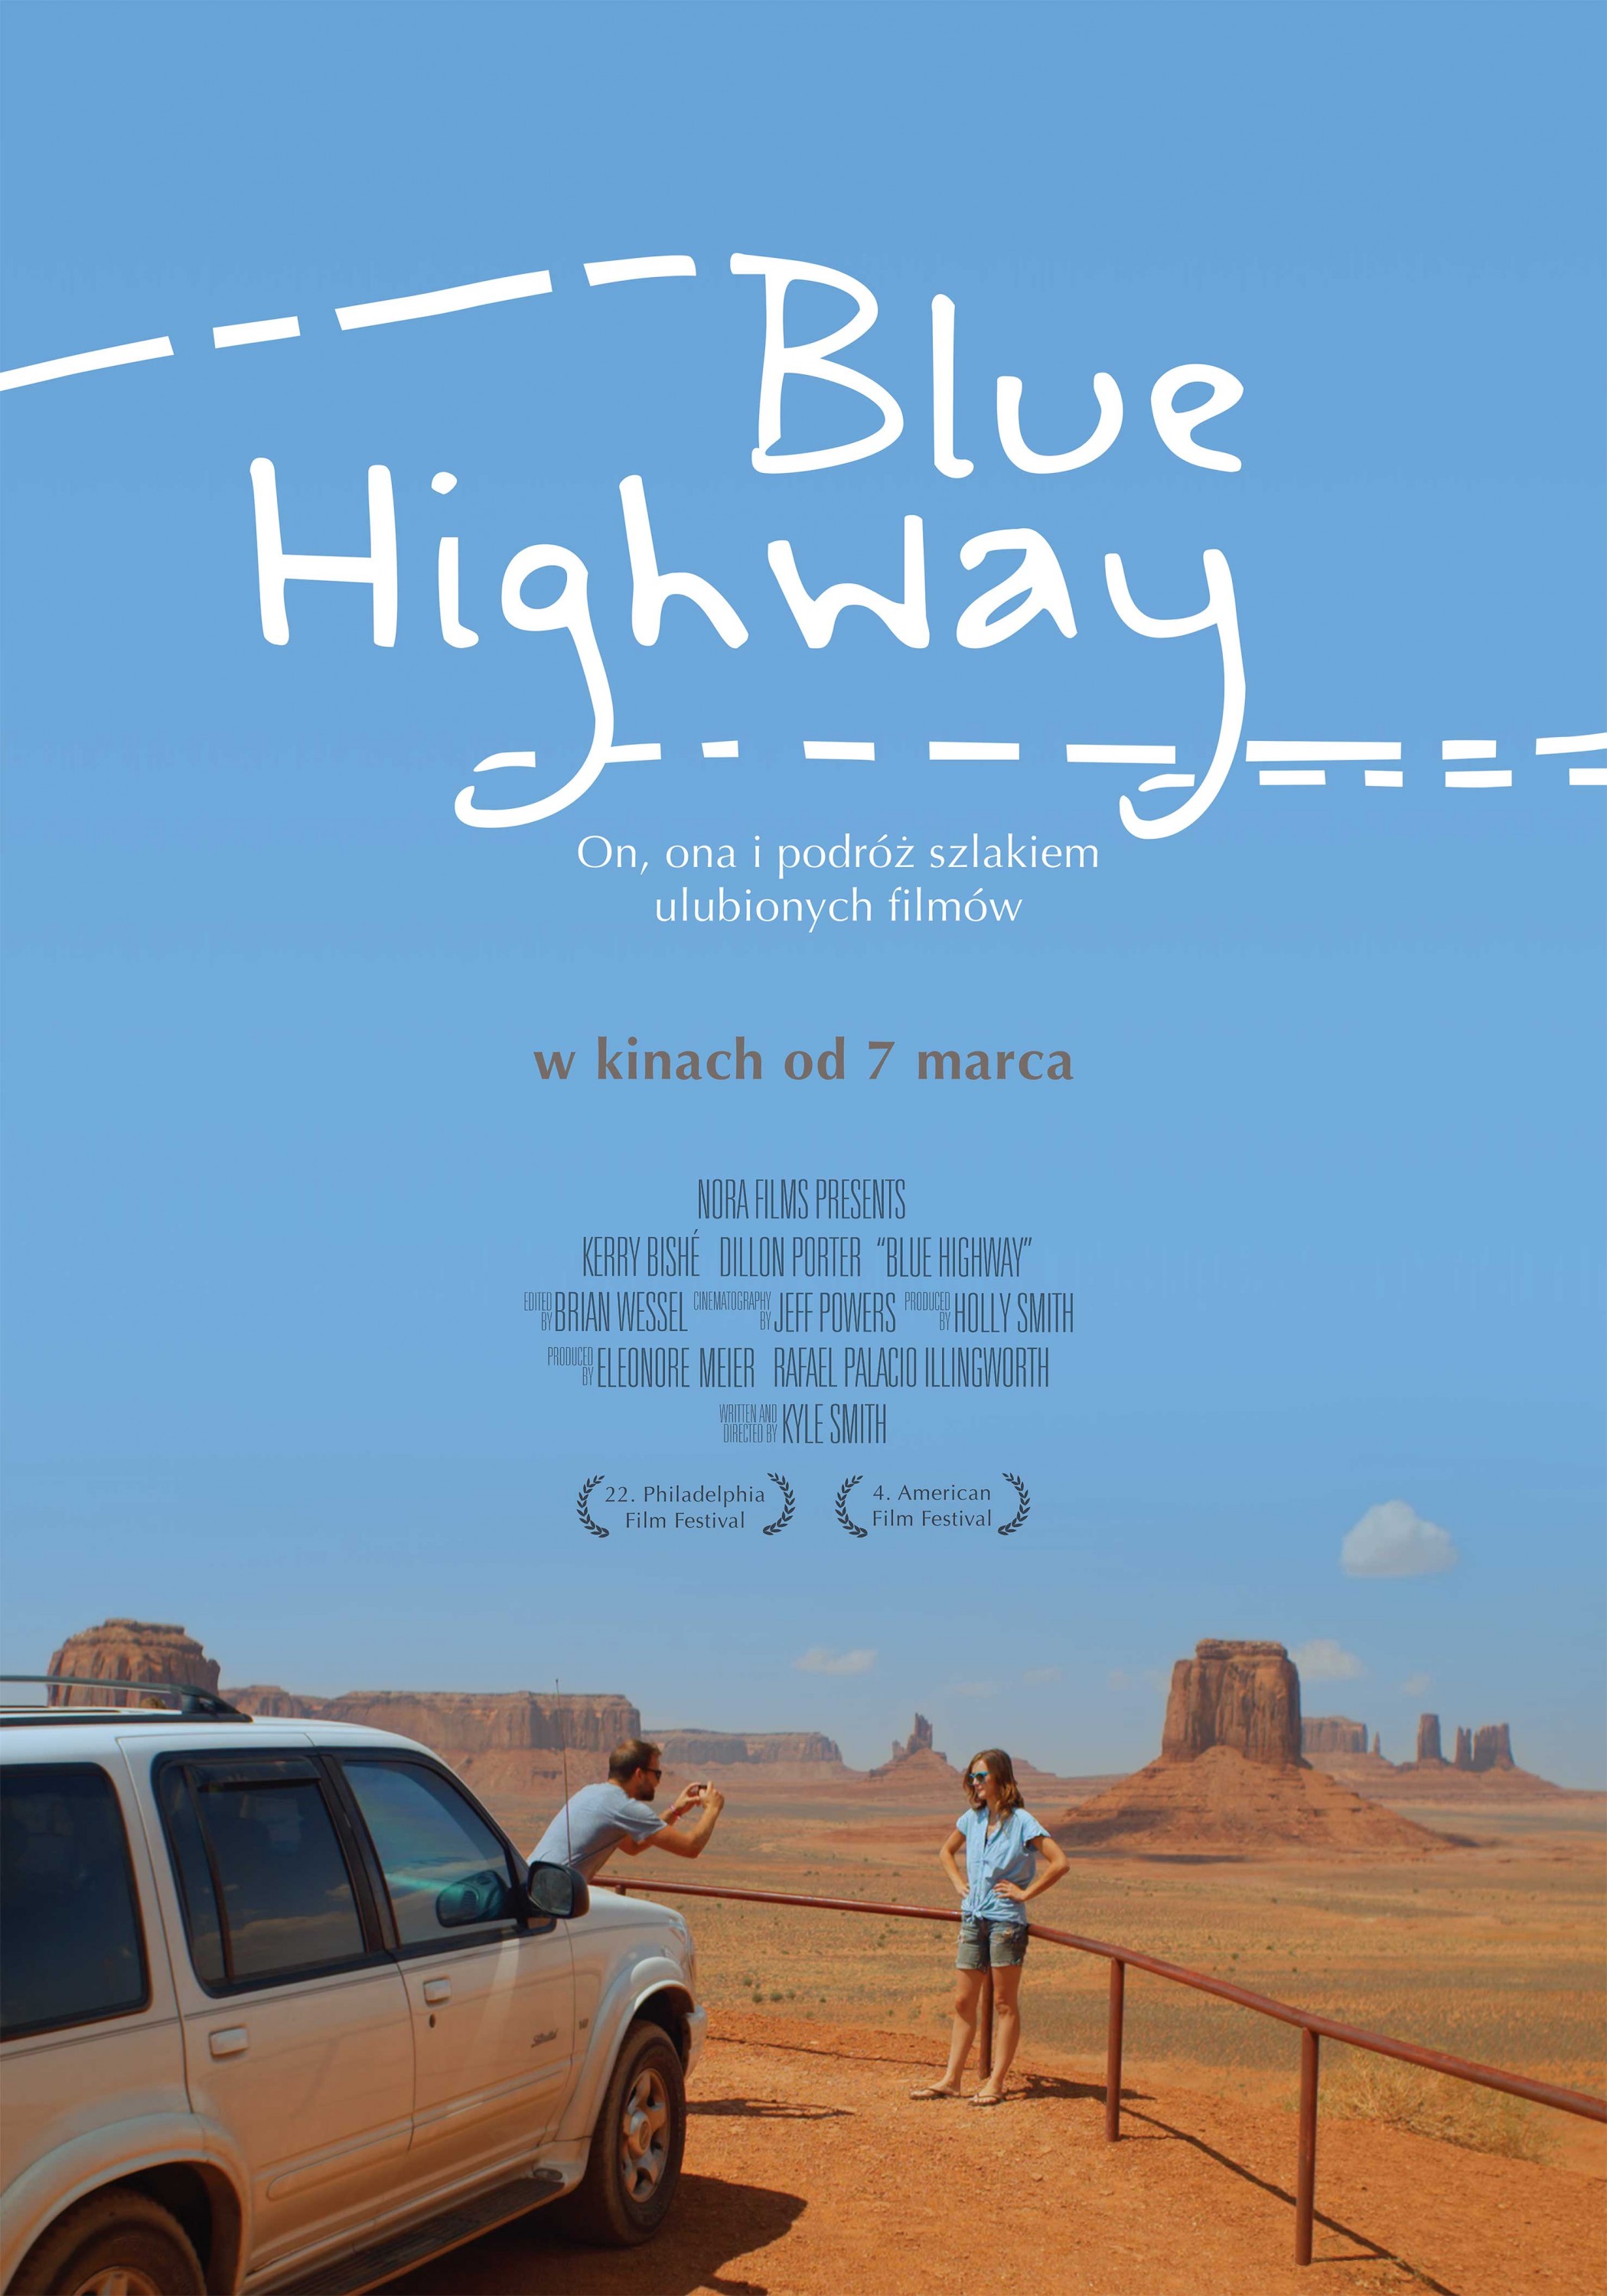 Mega Sized Movie Poster Image for Blue Highway 